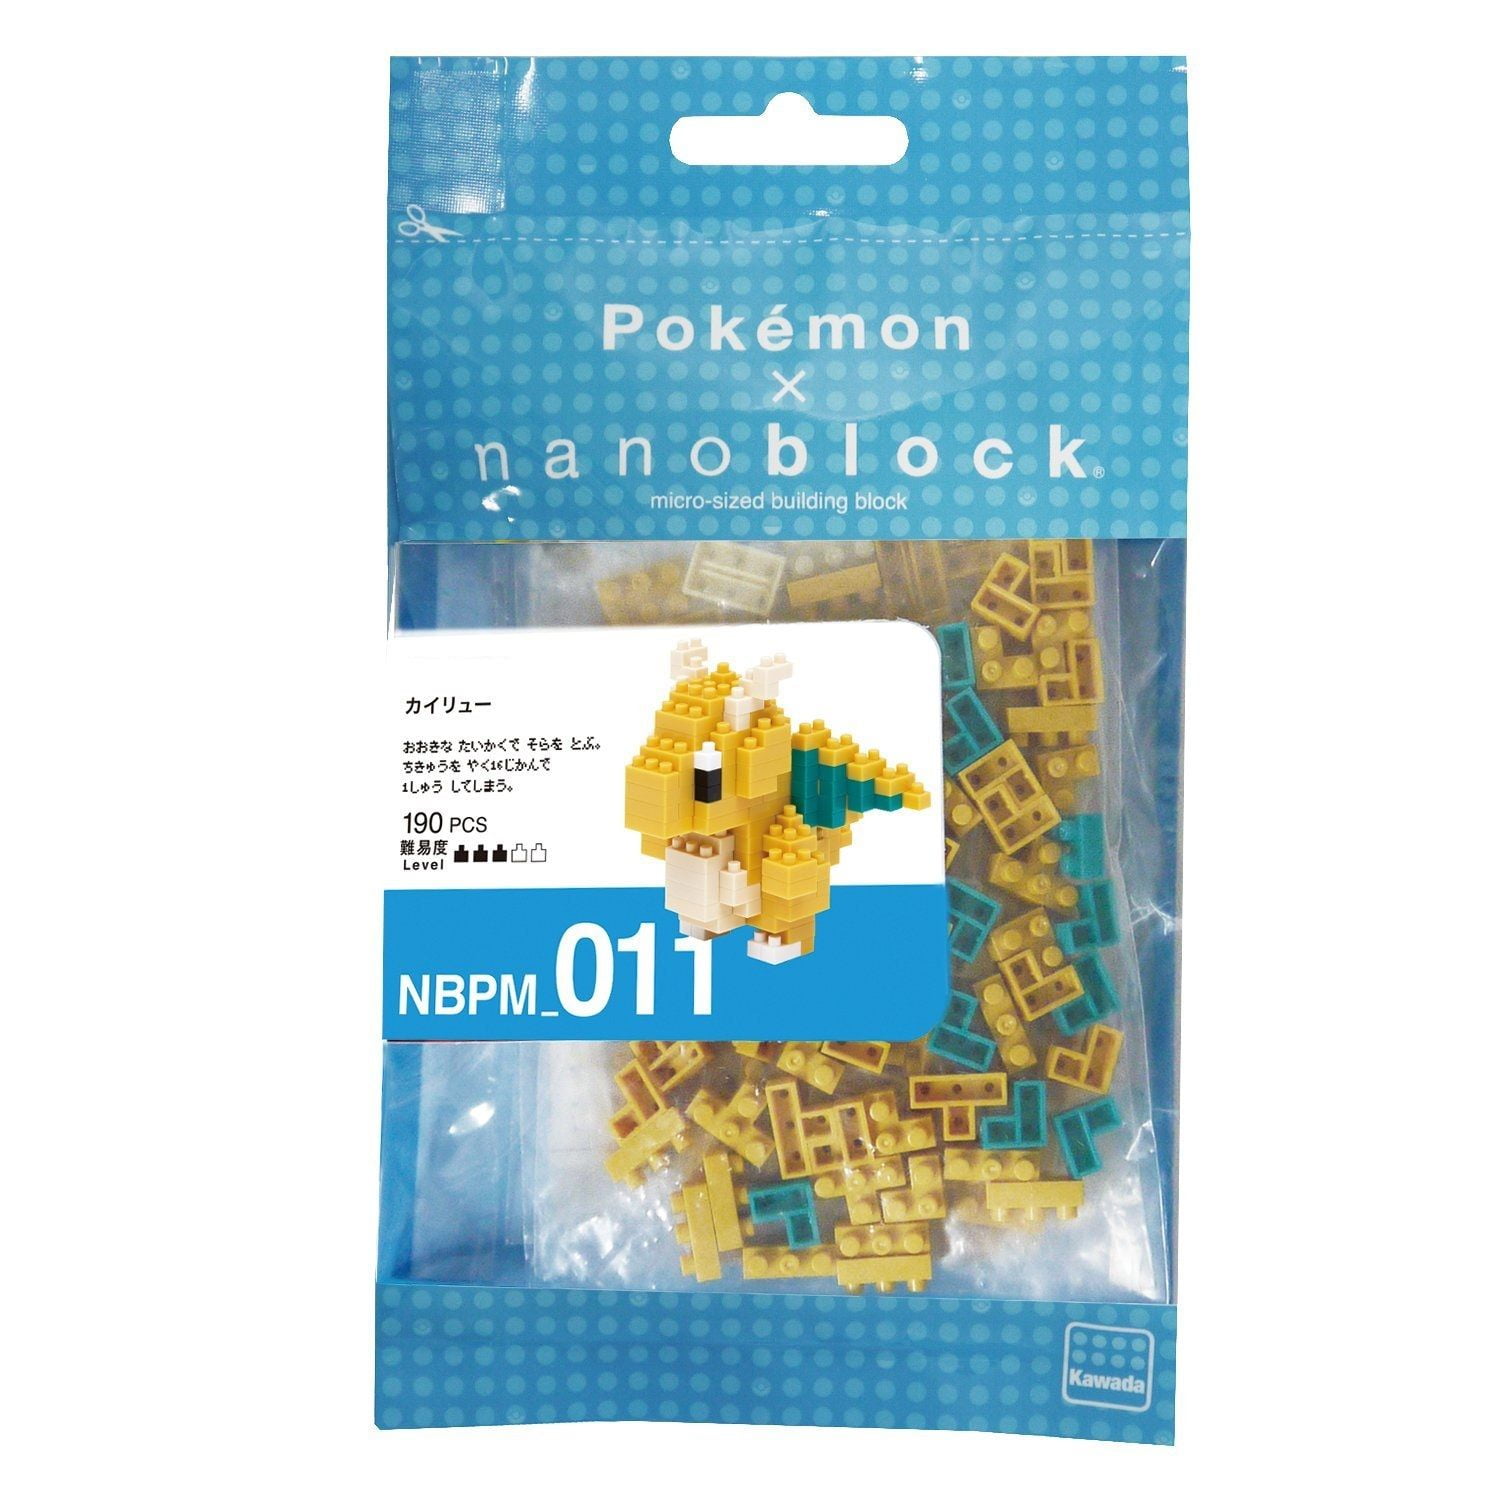 Dragonite Pokemon Nanoblock Micro Sized Building Block Brick Kawada NBPM011 